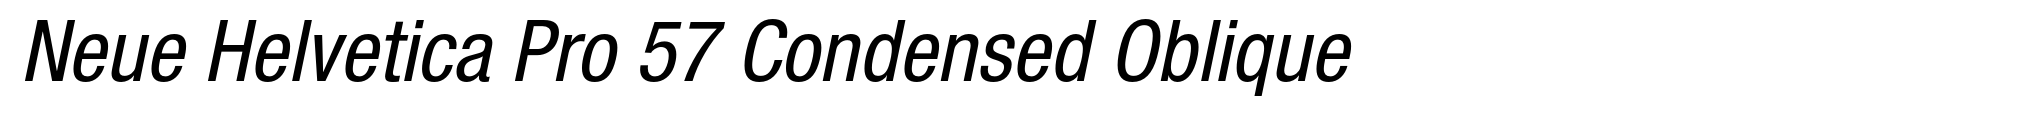 Neue Helvetica Pro 57 Condensed Oblique image